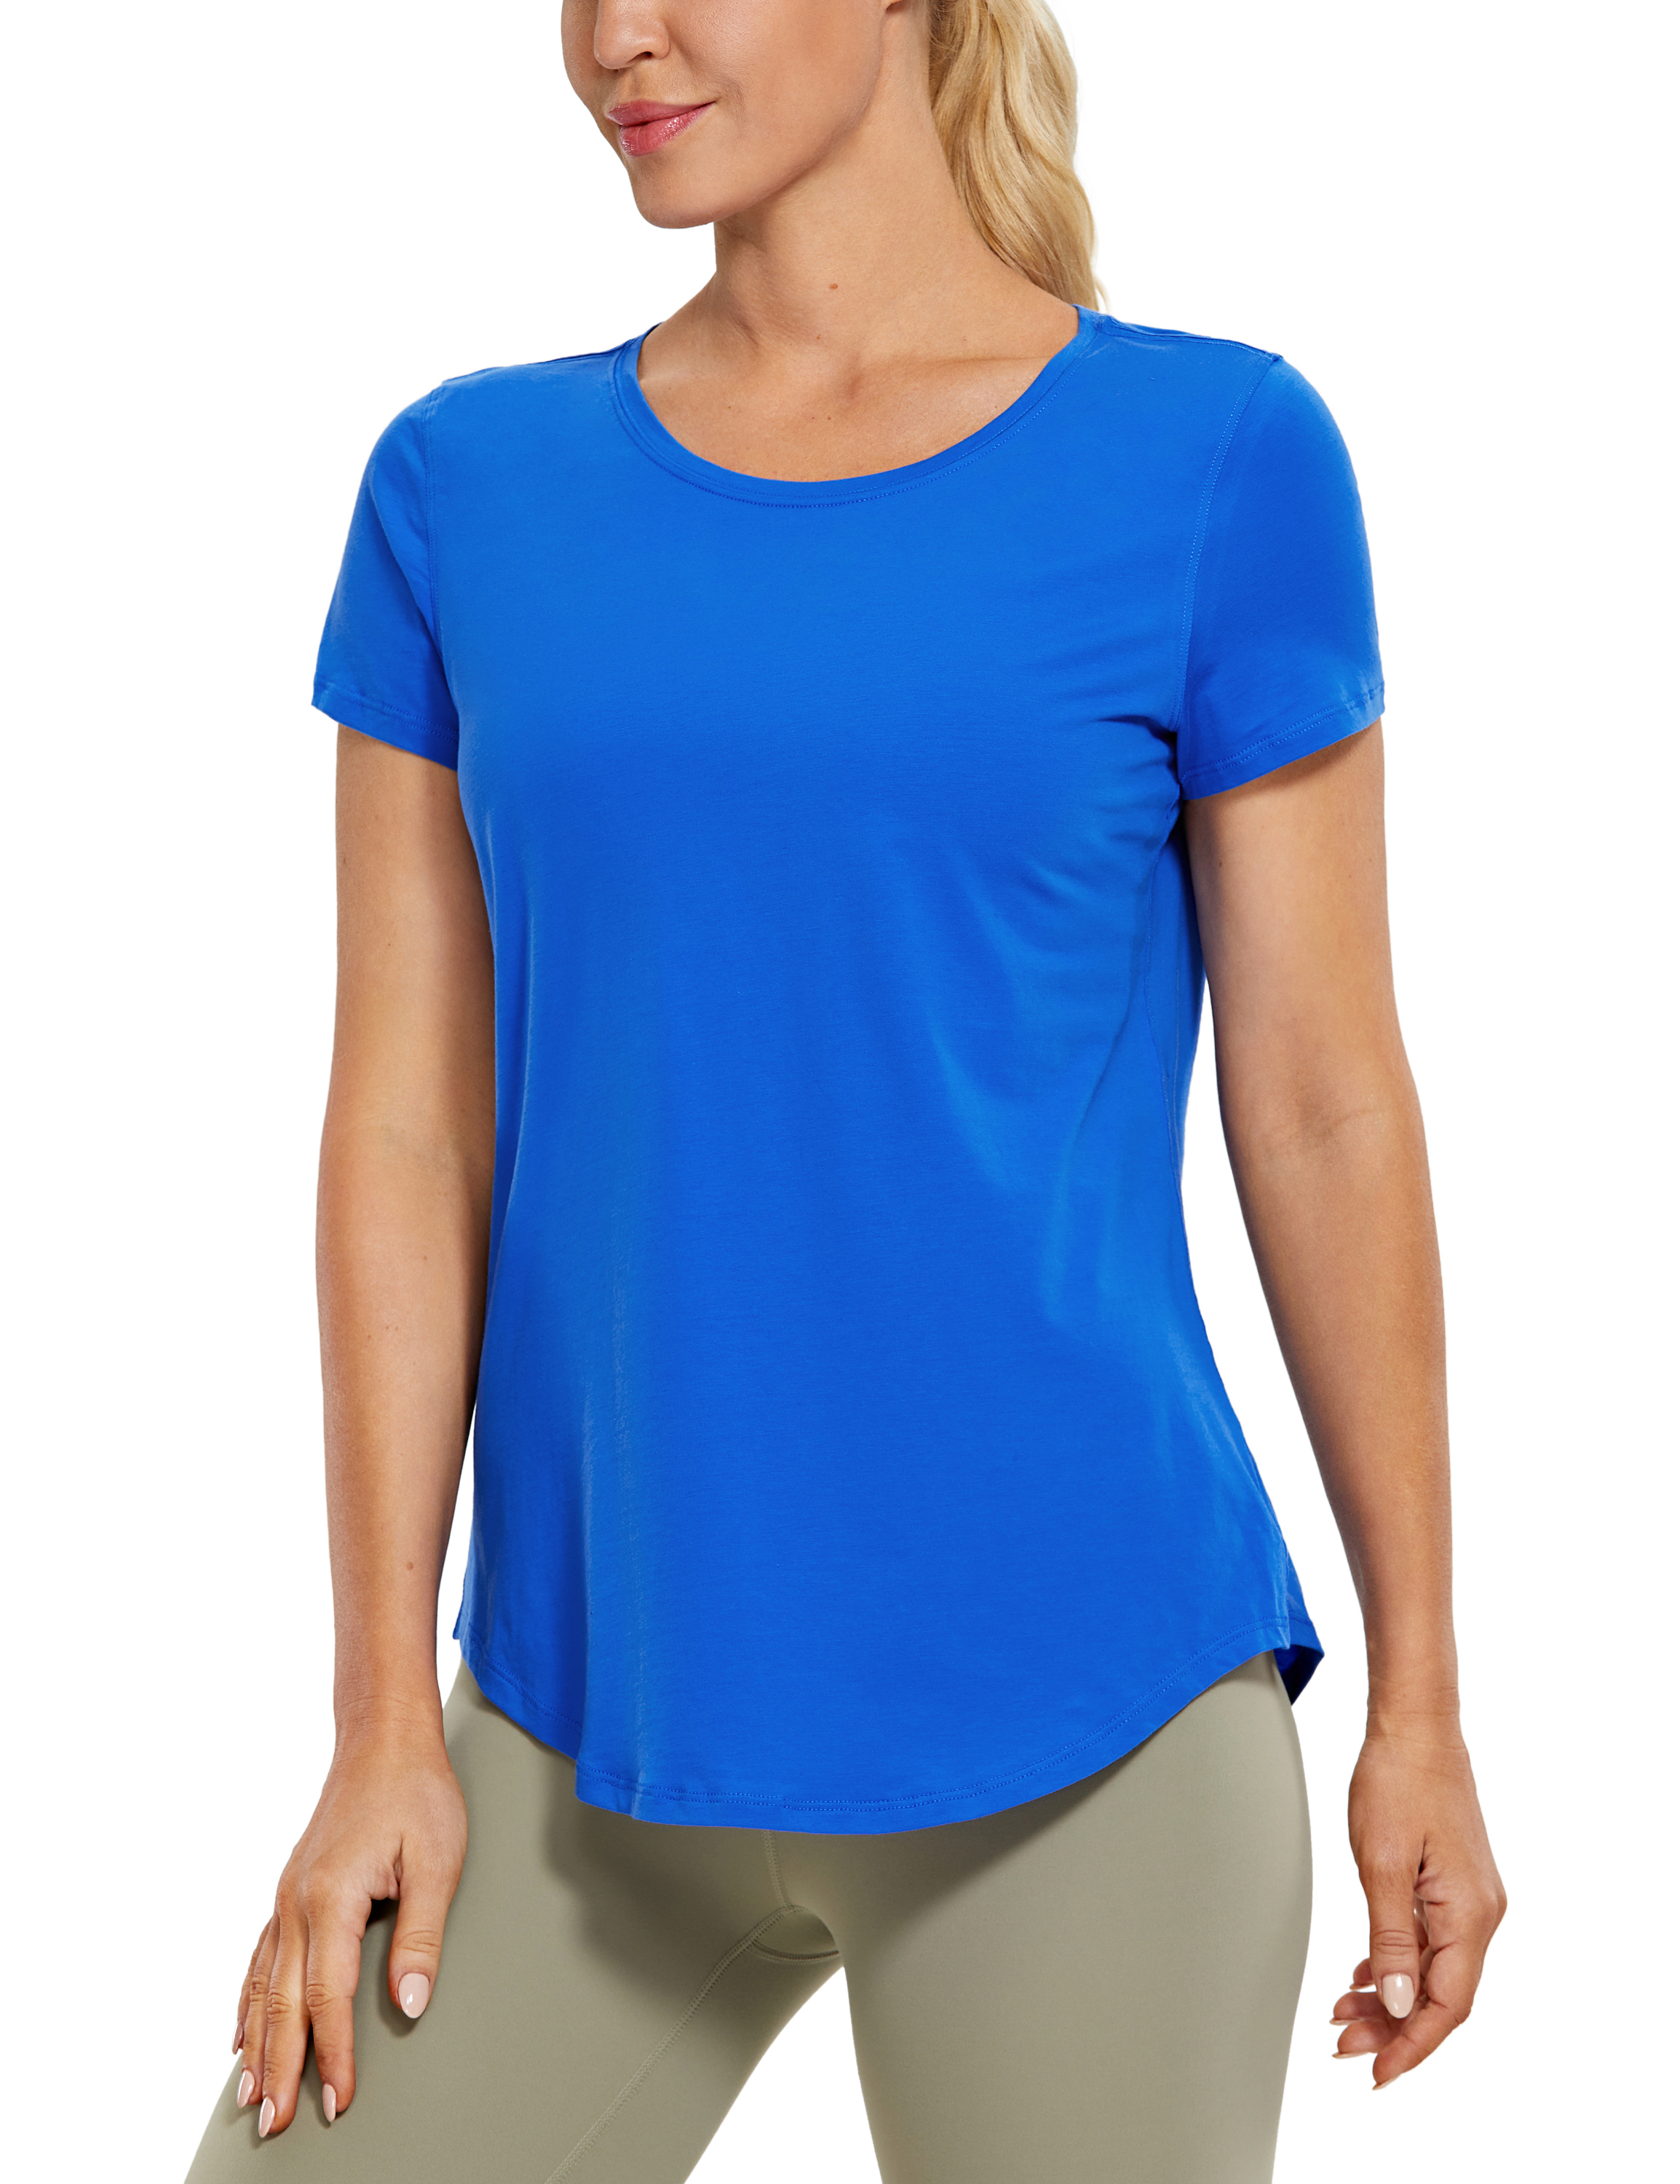 CRZ YOGA Women's Pima Cotton Workout Crop Tops Short Sleeve Running  T-Shirts